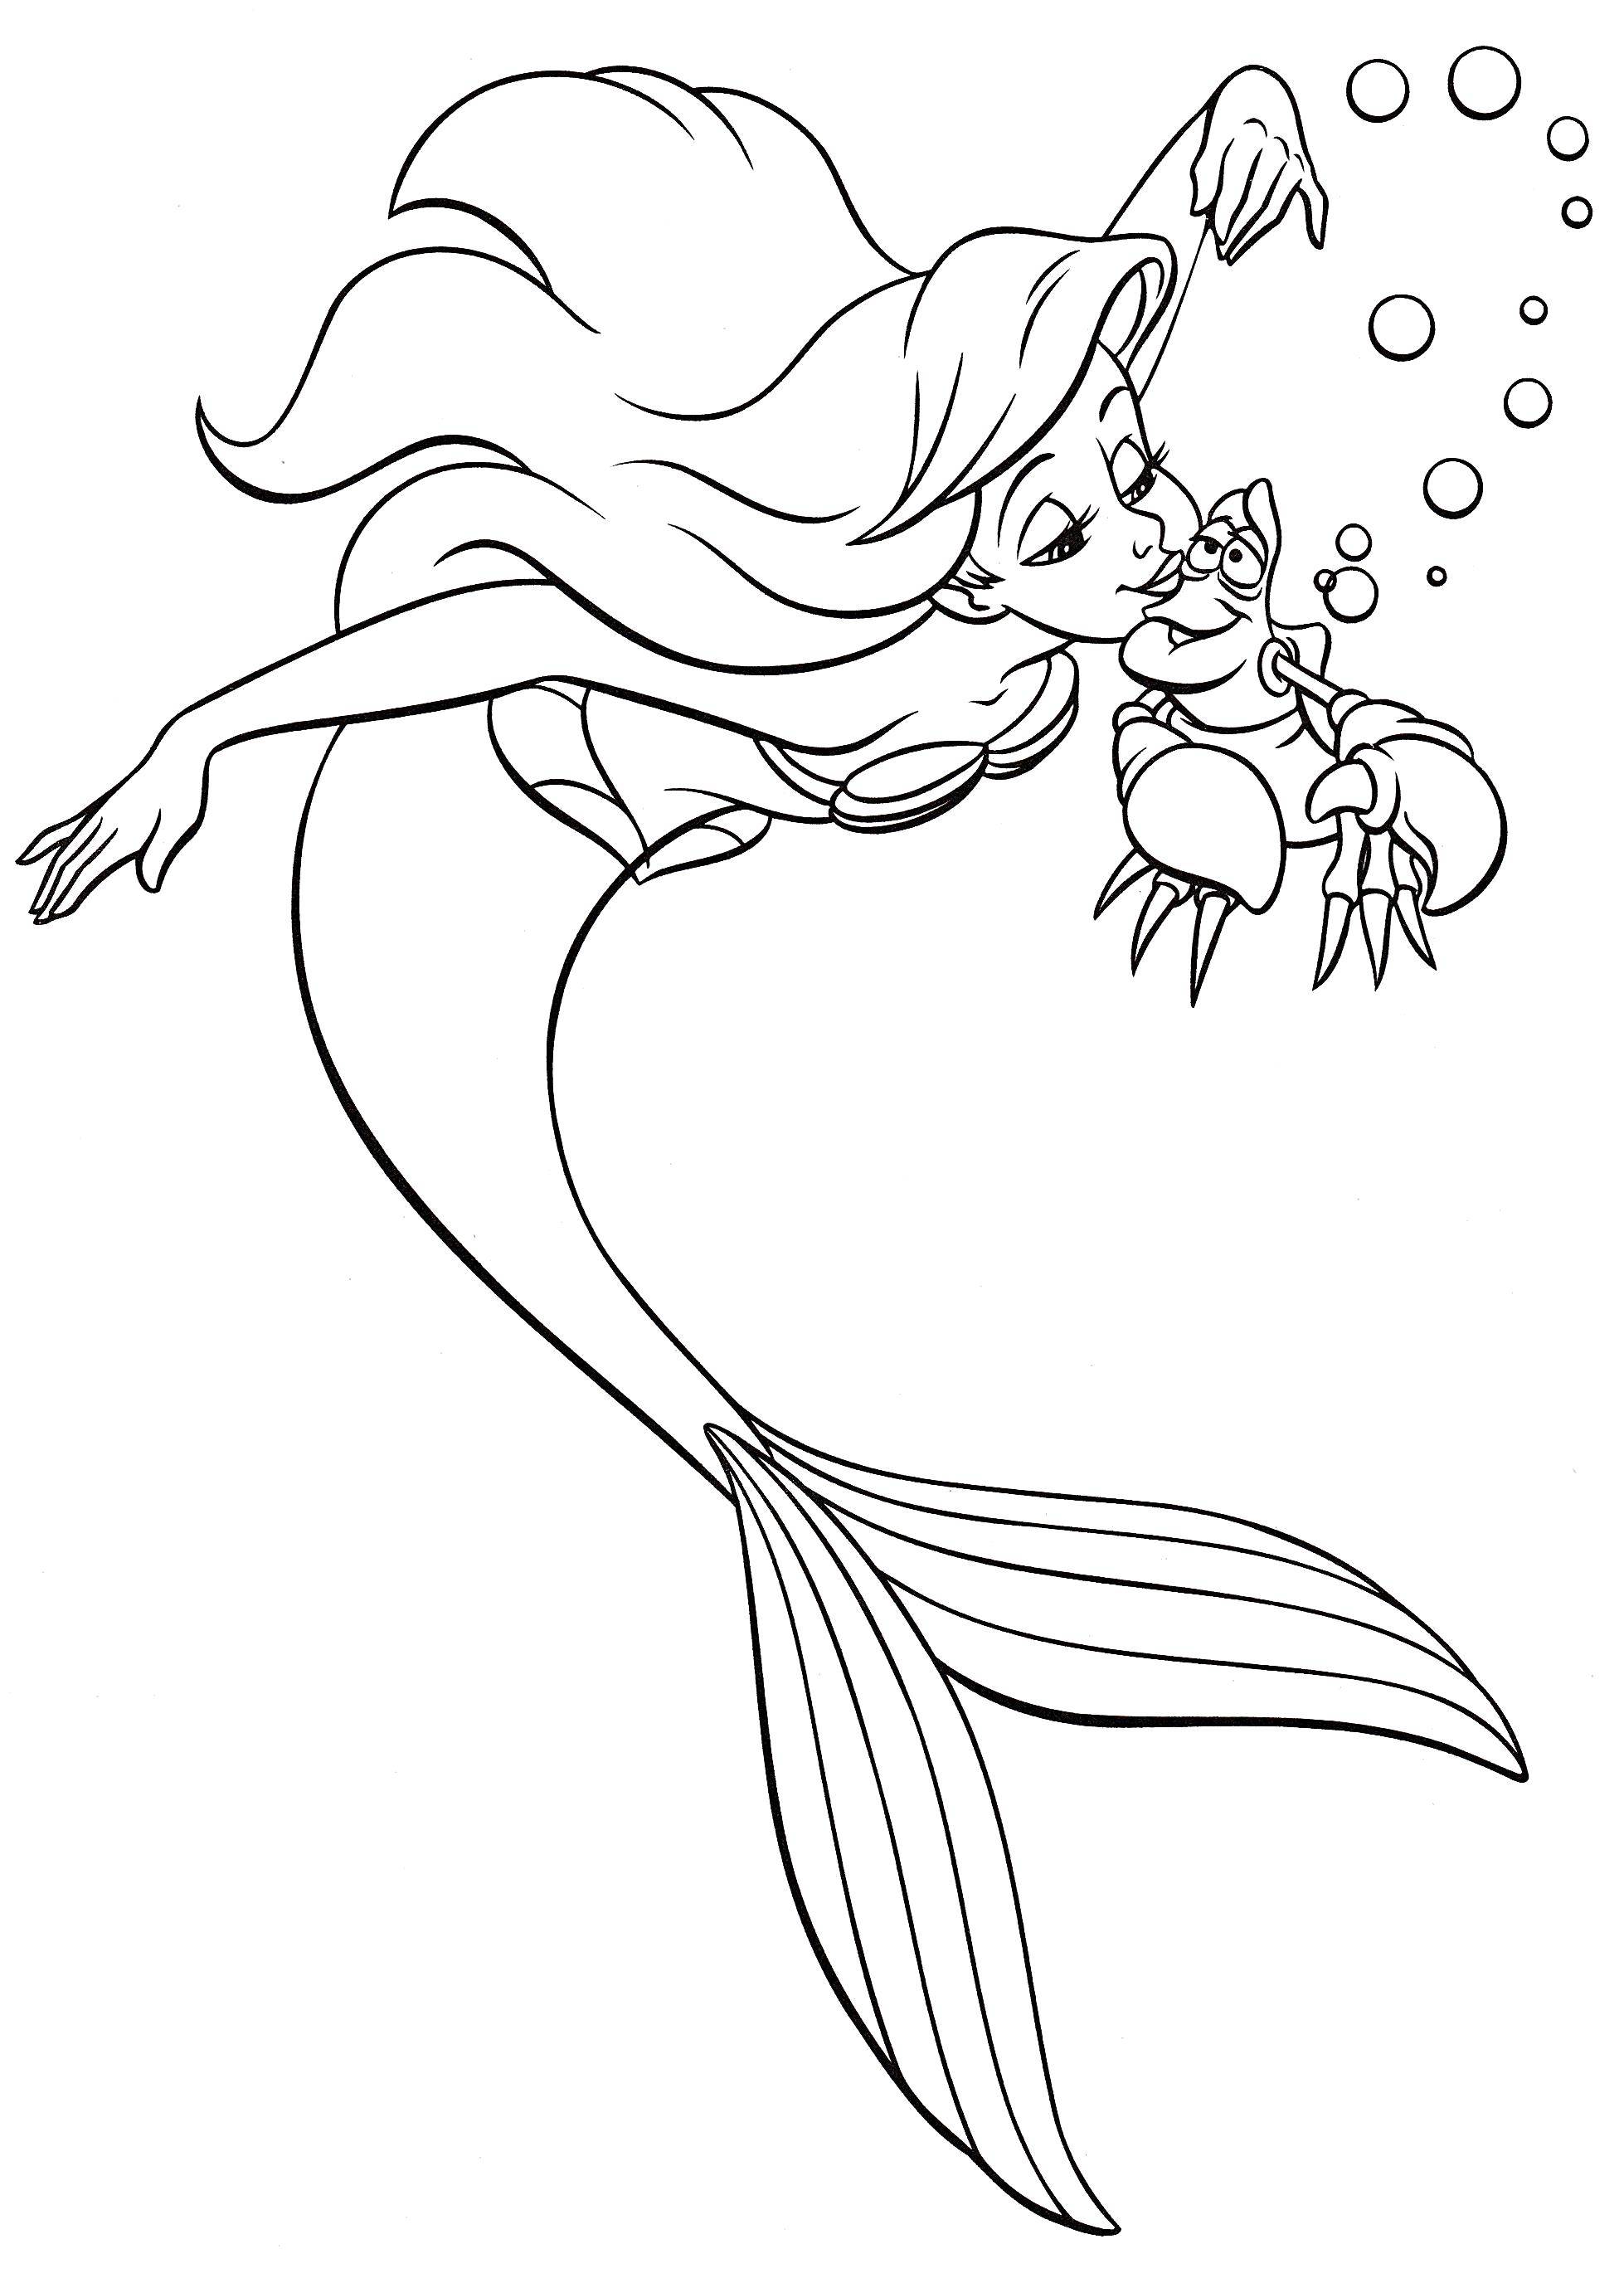 Coloring Ariel kisses crustacean. Category the little mermaid Ariel. Tags:  Disney, the little mermaid, Ariel.